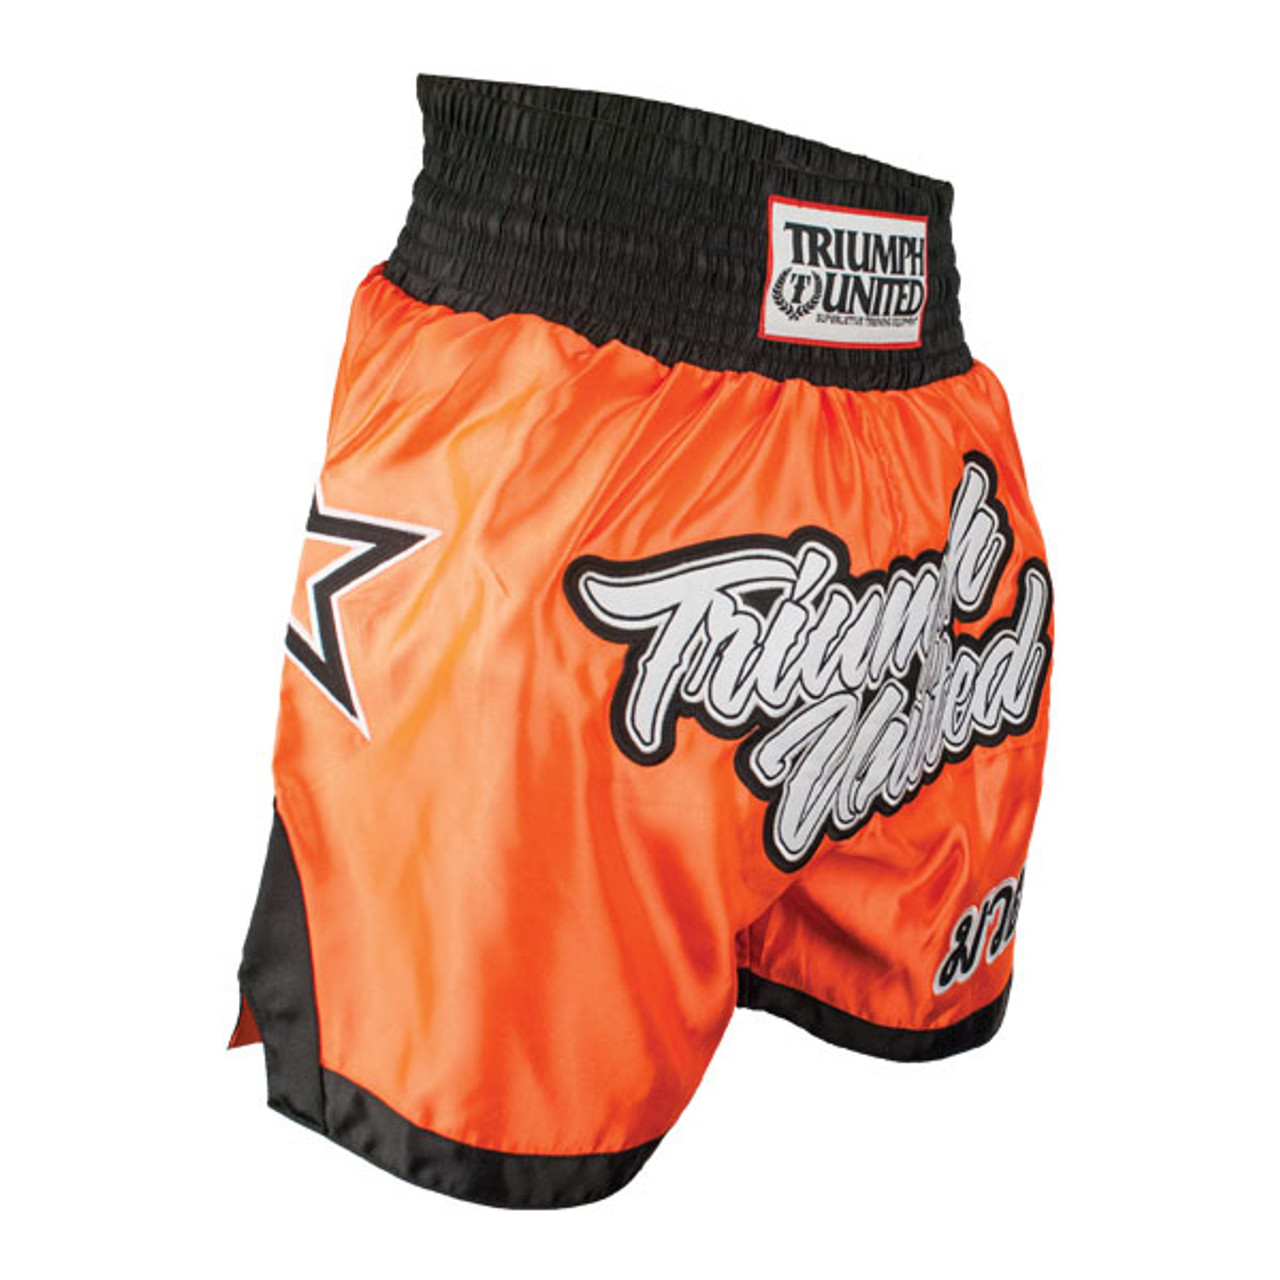 Triumph United Fighter Muay Thai Shorts